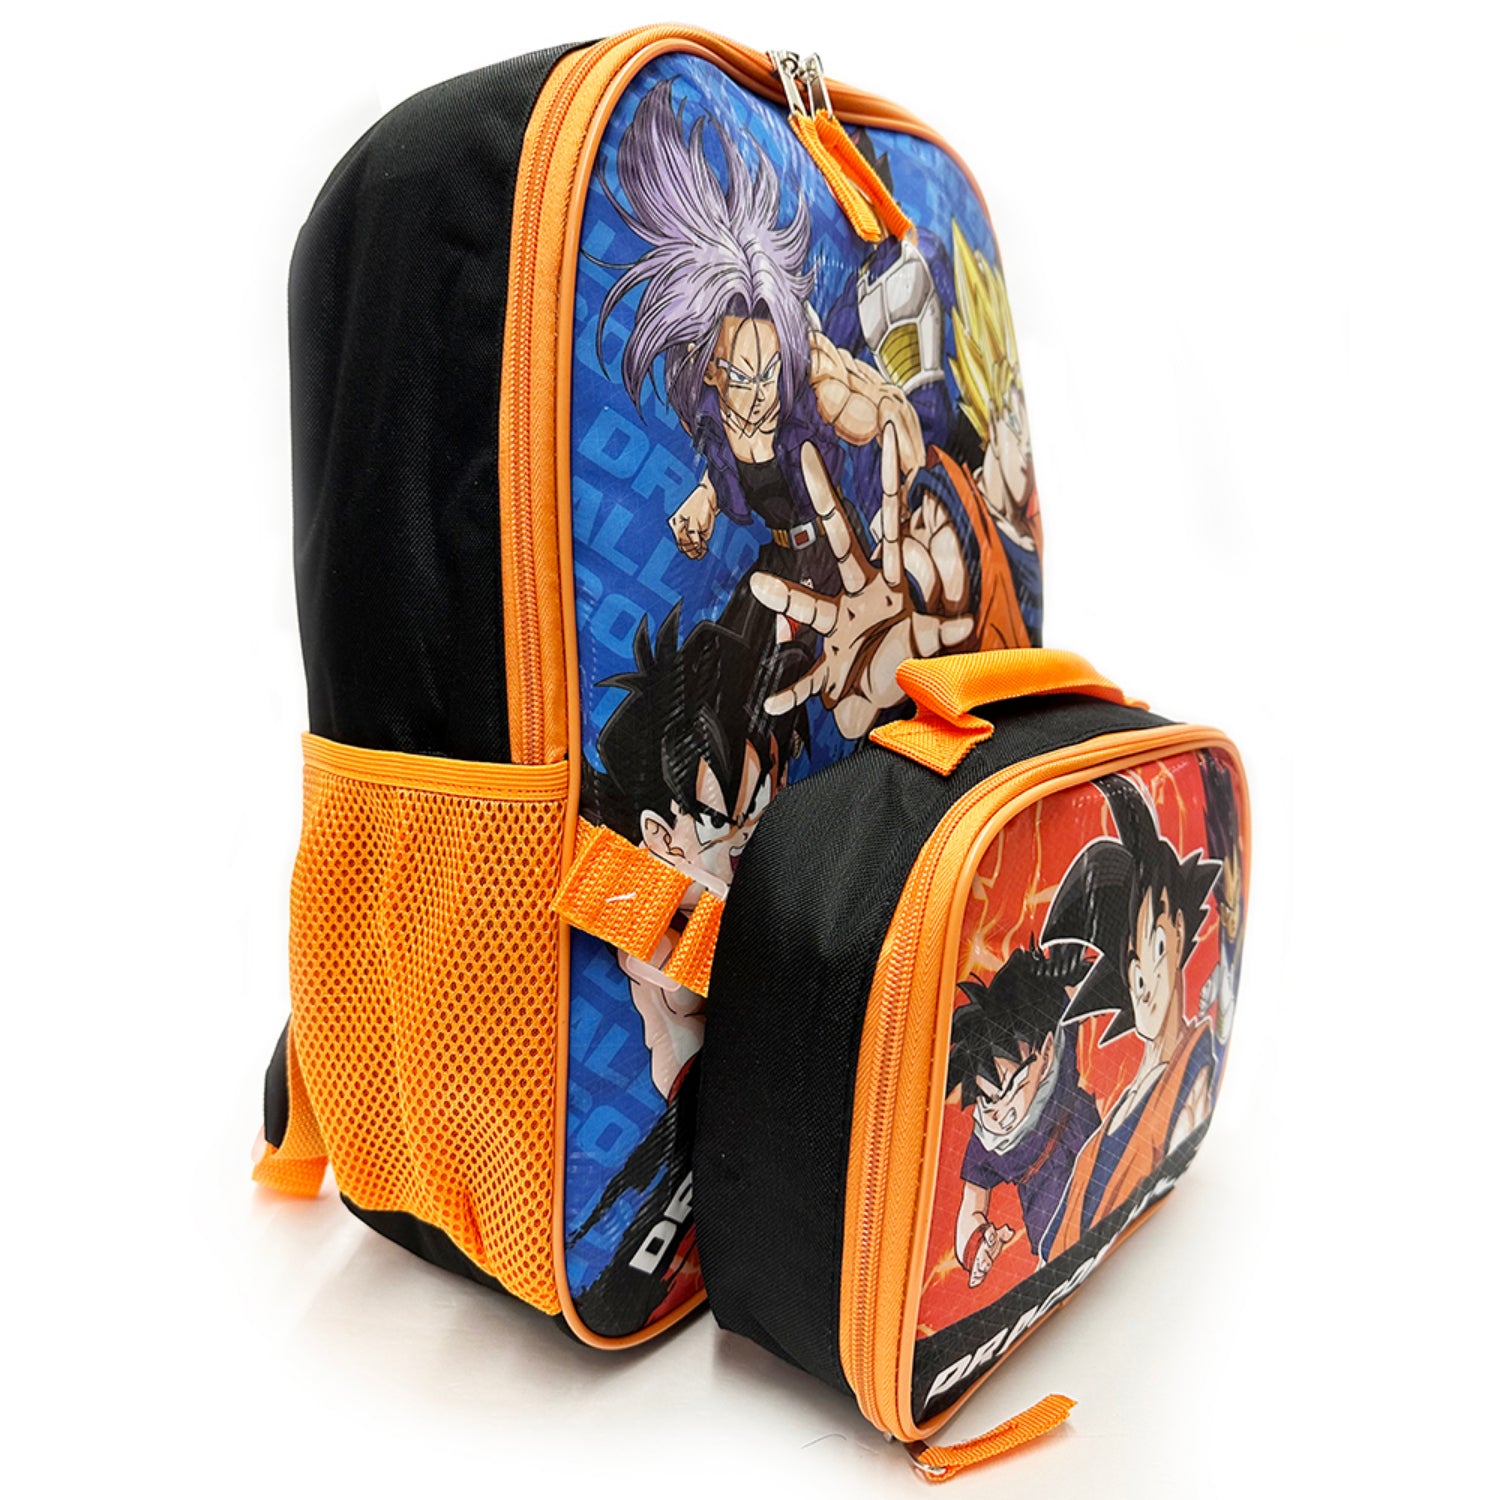  Bioworld Dragon Ball Z kids Backpack Set 4-Piece